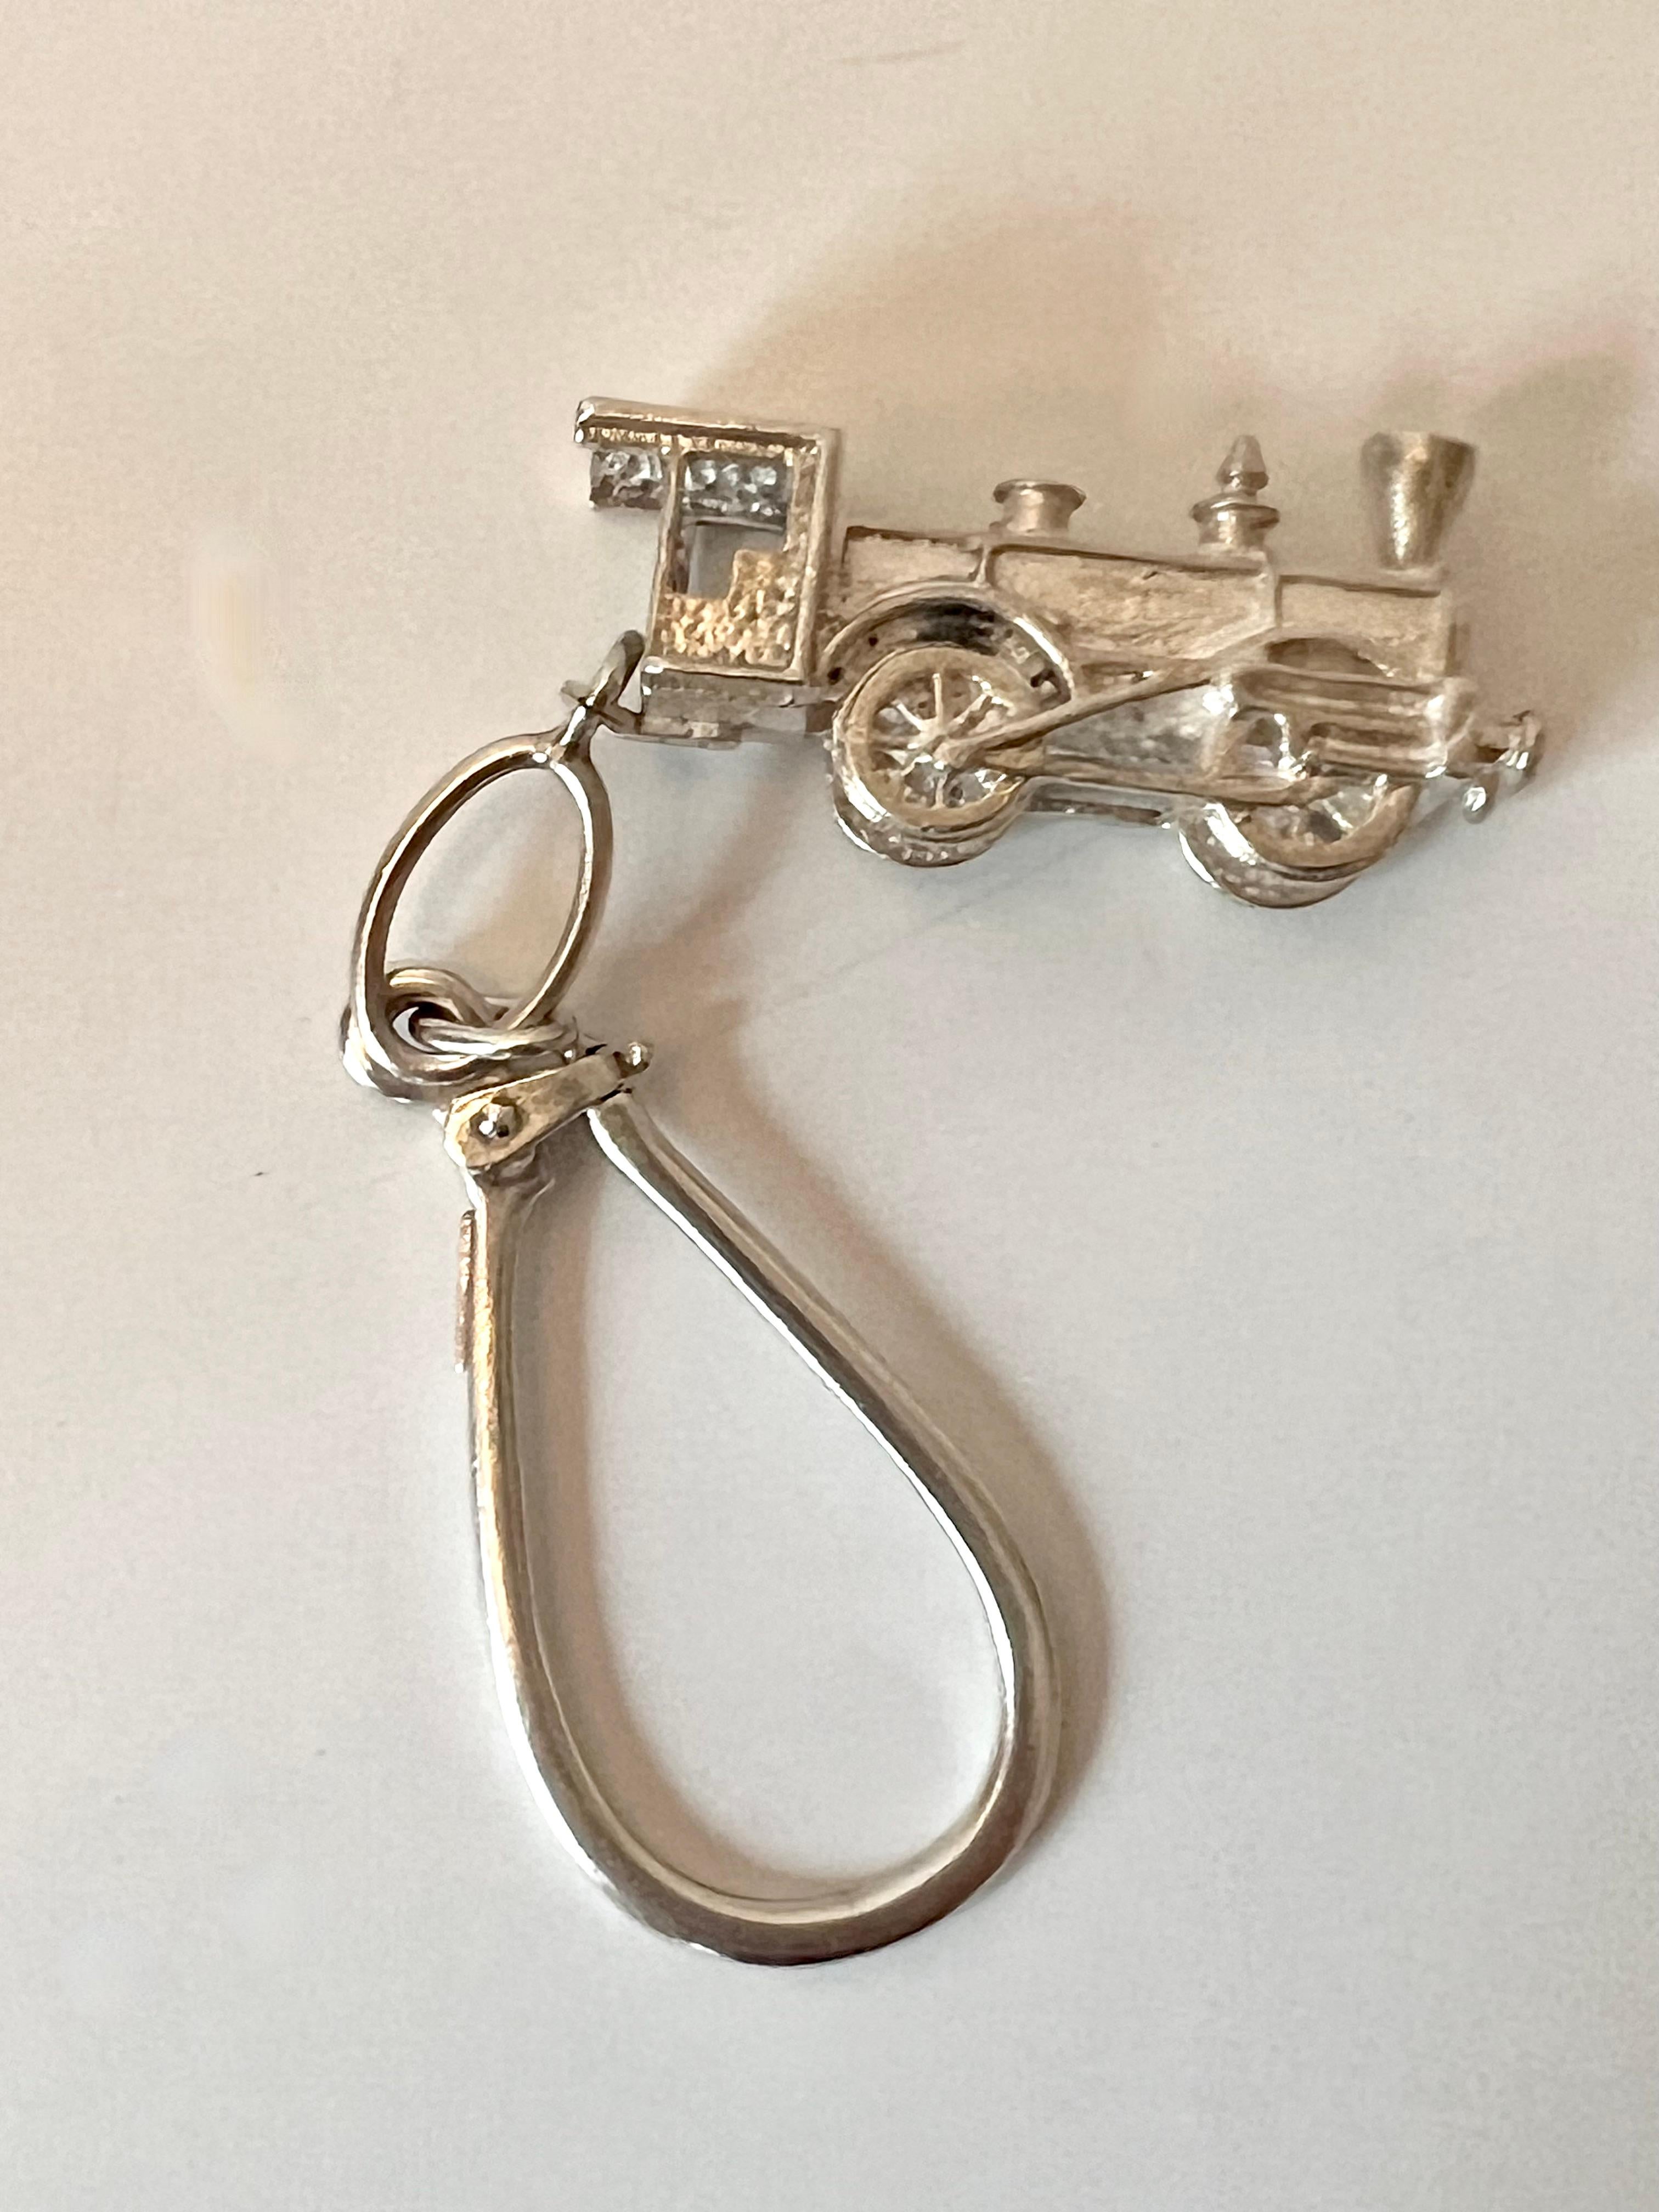 train key chain